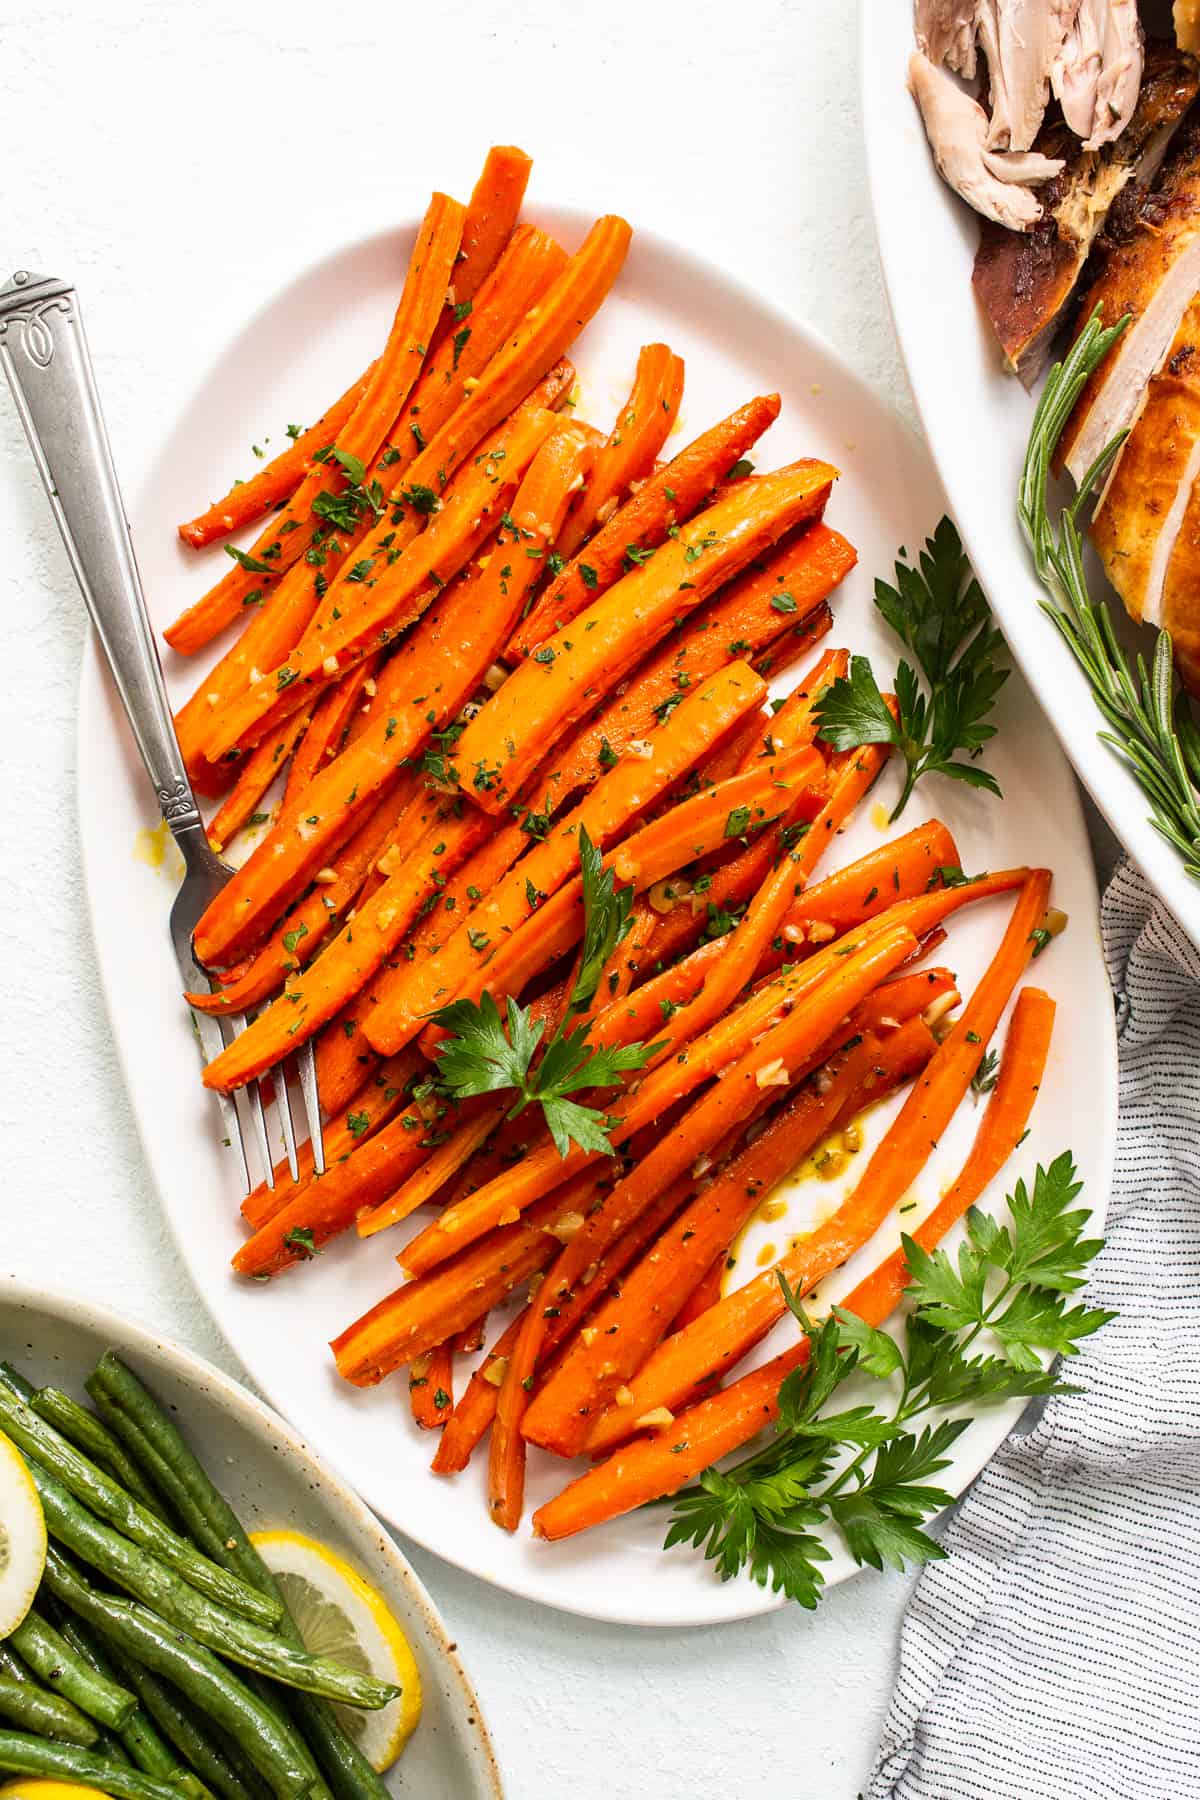 Garlic glazed carrots on a plate.